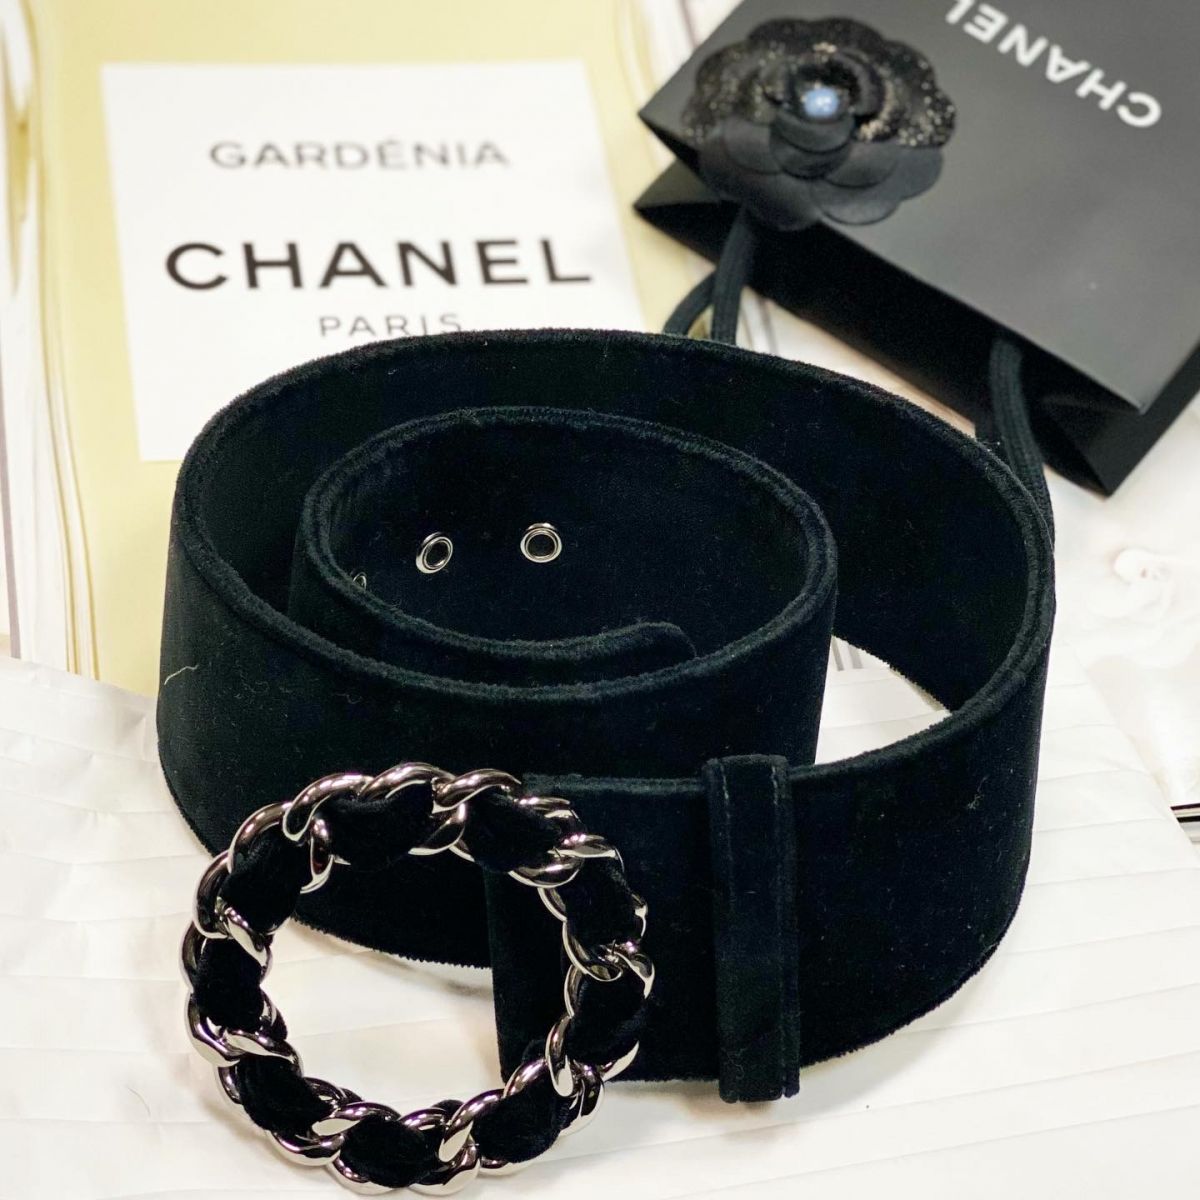 Ремень Chanel размер 75/30 цена 30 770 руб 